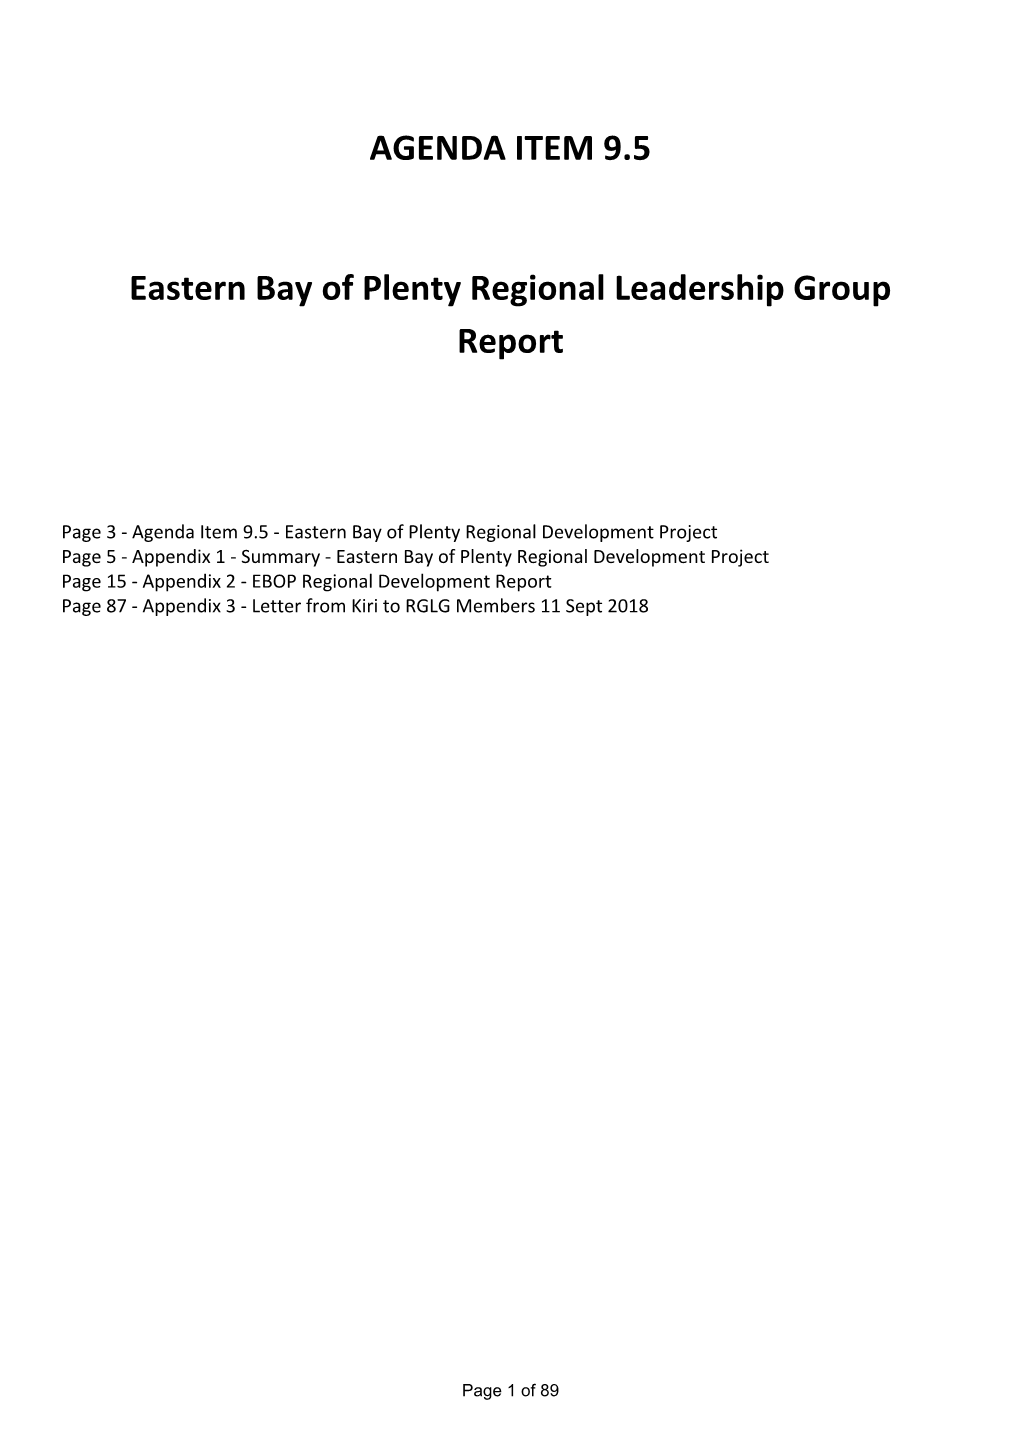 AGENDA ITEM 9.5 Eastern Bay of Plenty Regional Leadership Group